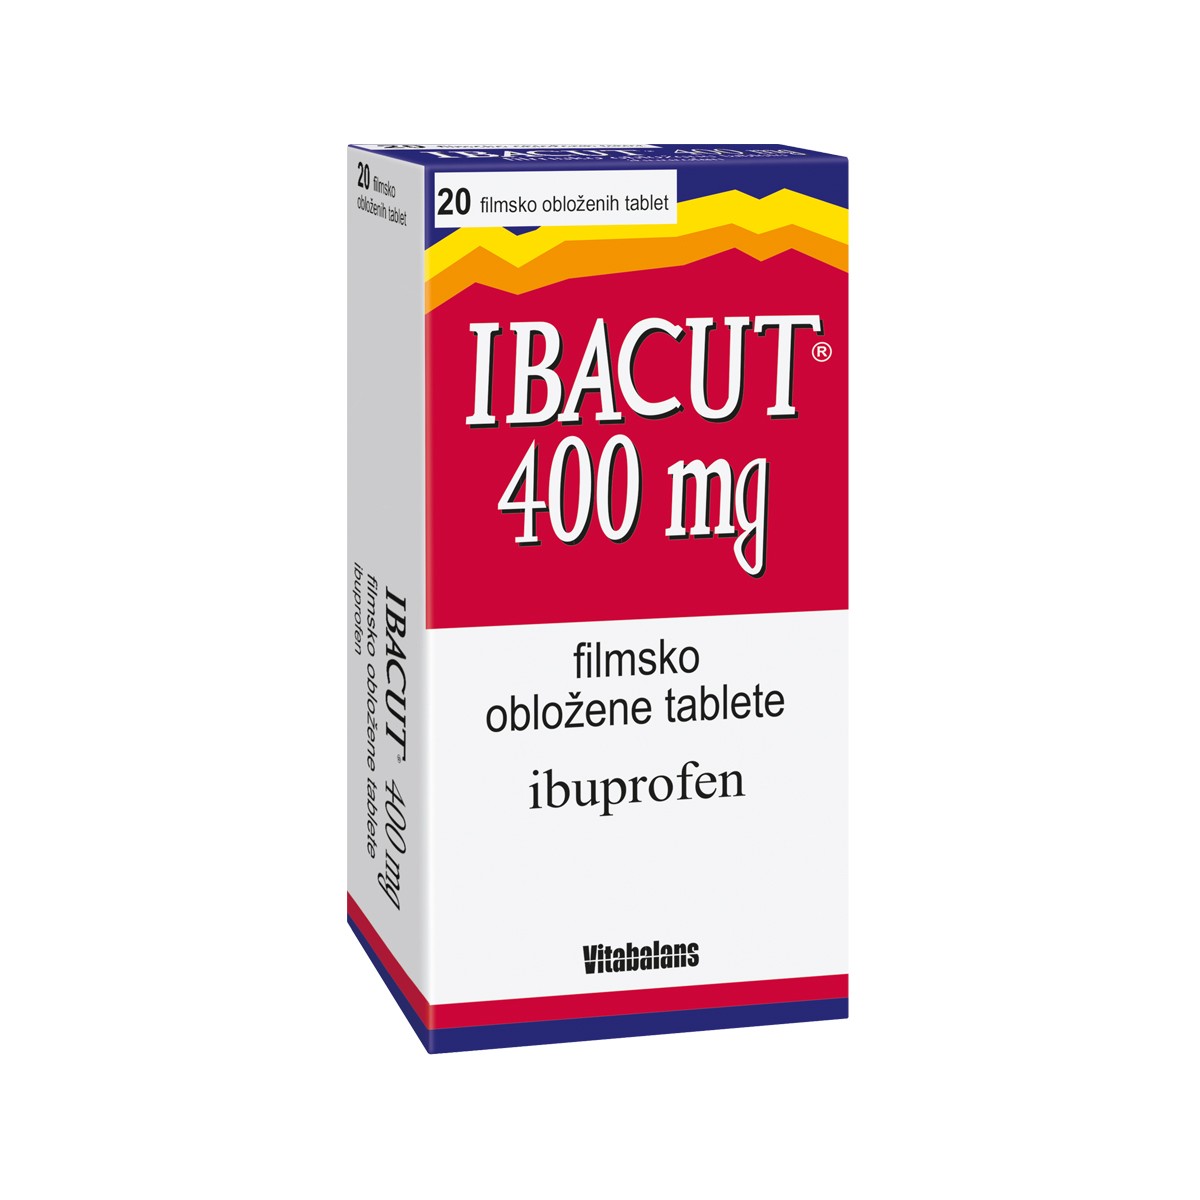 Vitabalans Ibacut 400 mg, 20 filmsko obloženih tablet